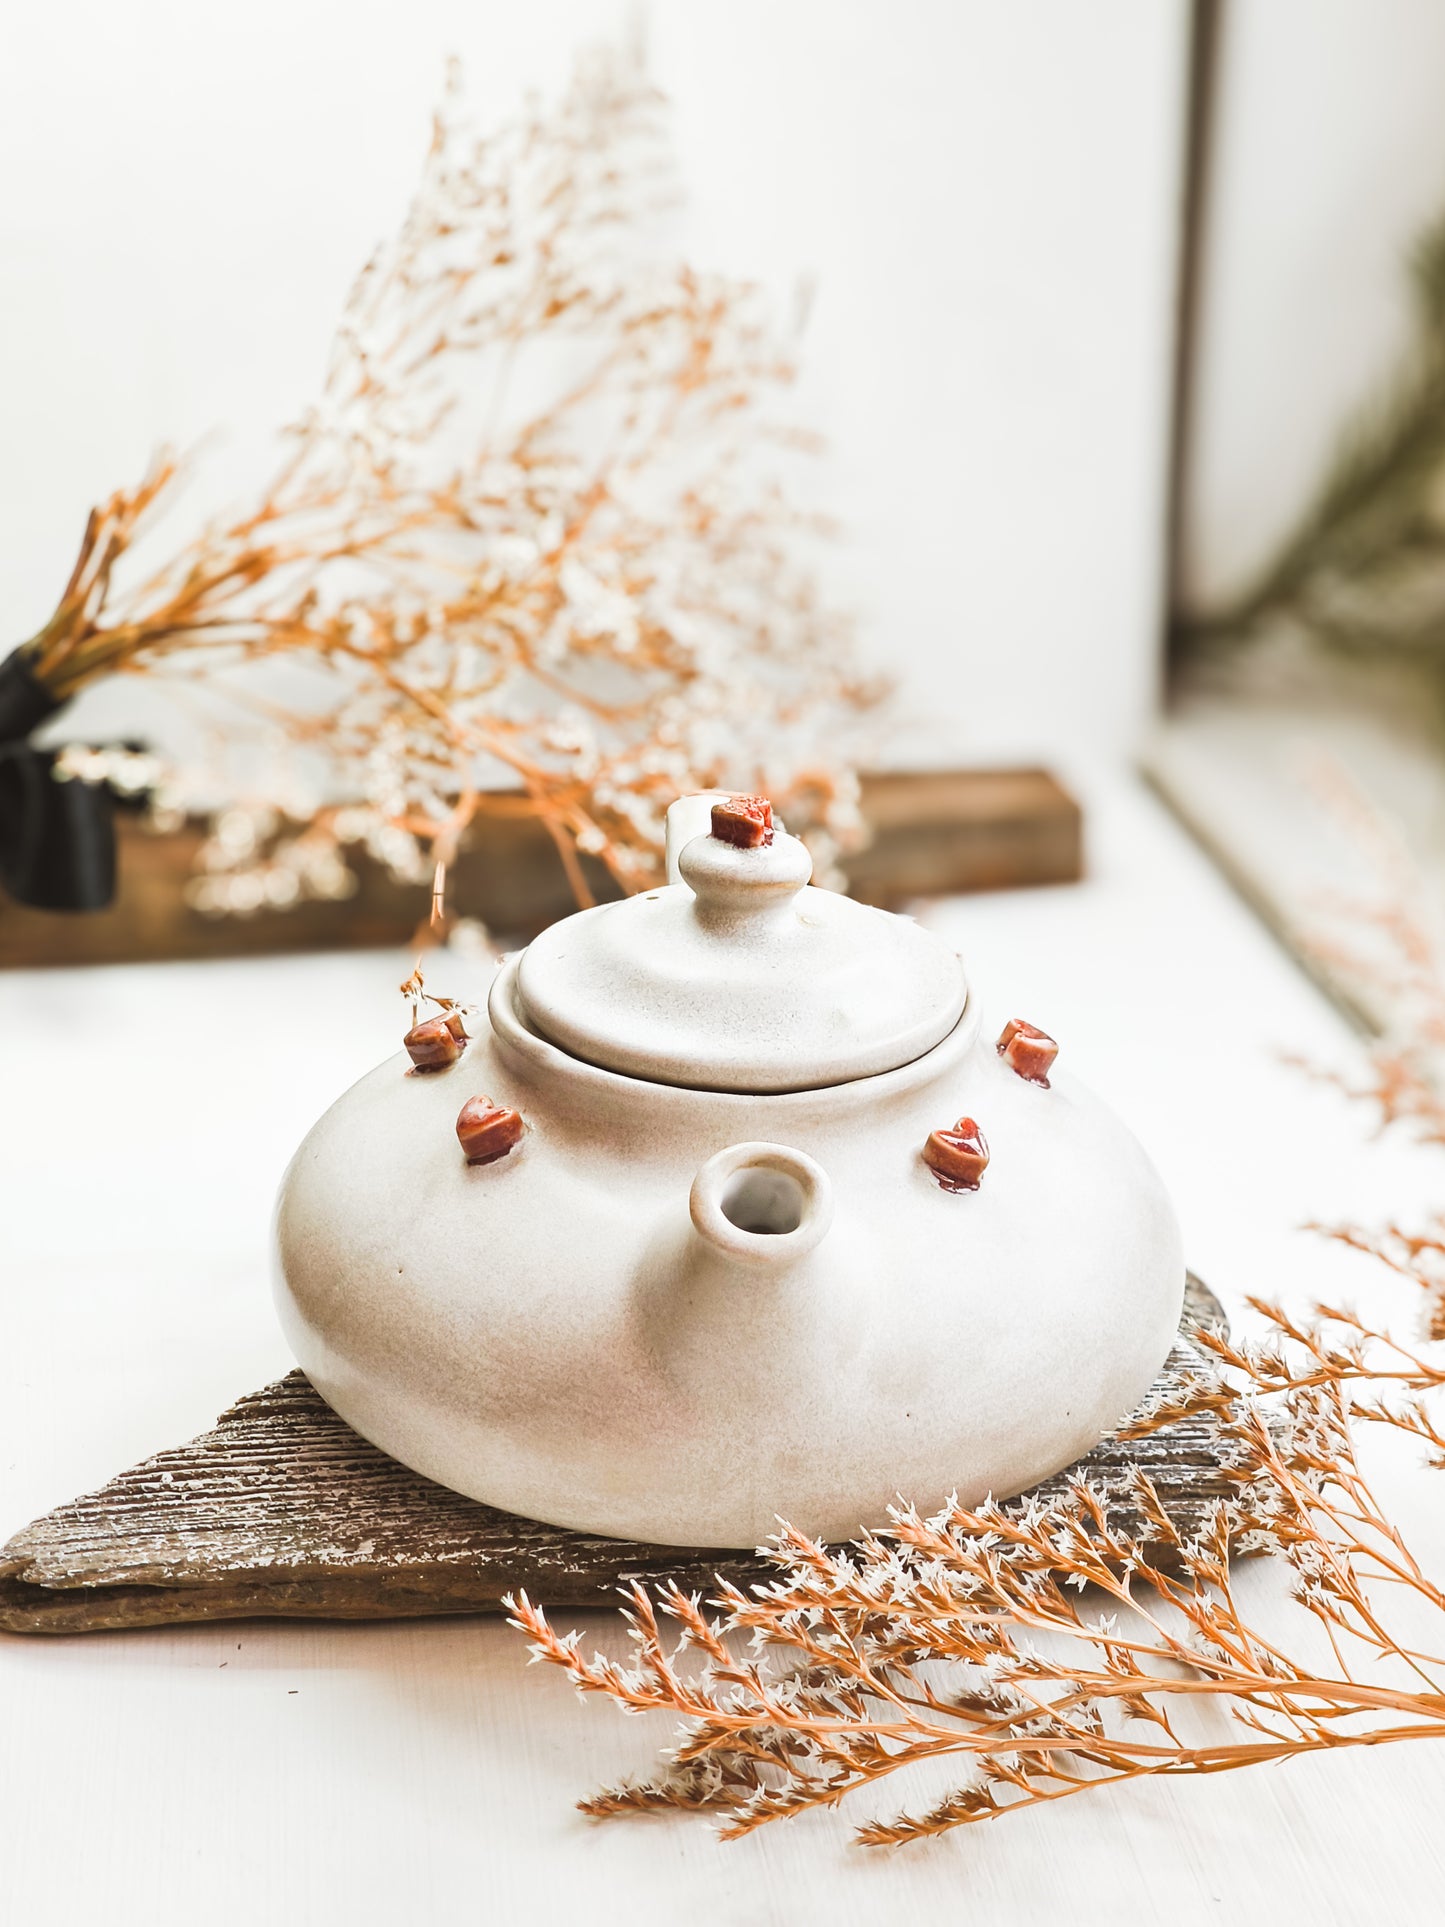 Ceramic teapot with a heart motif